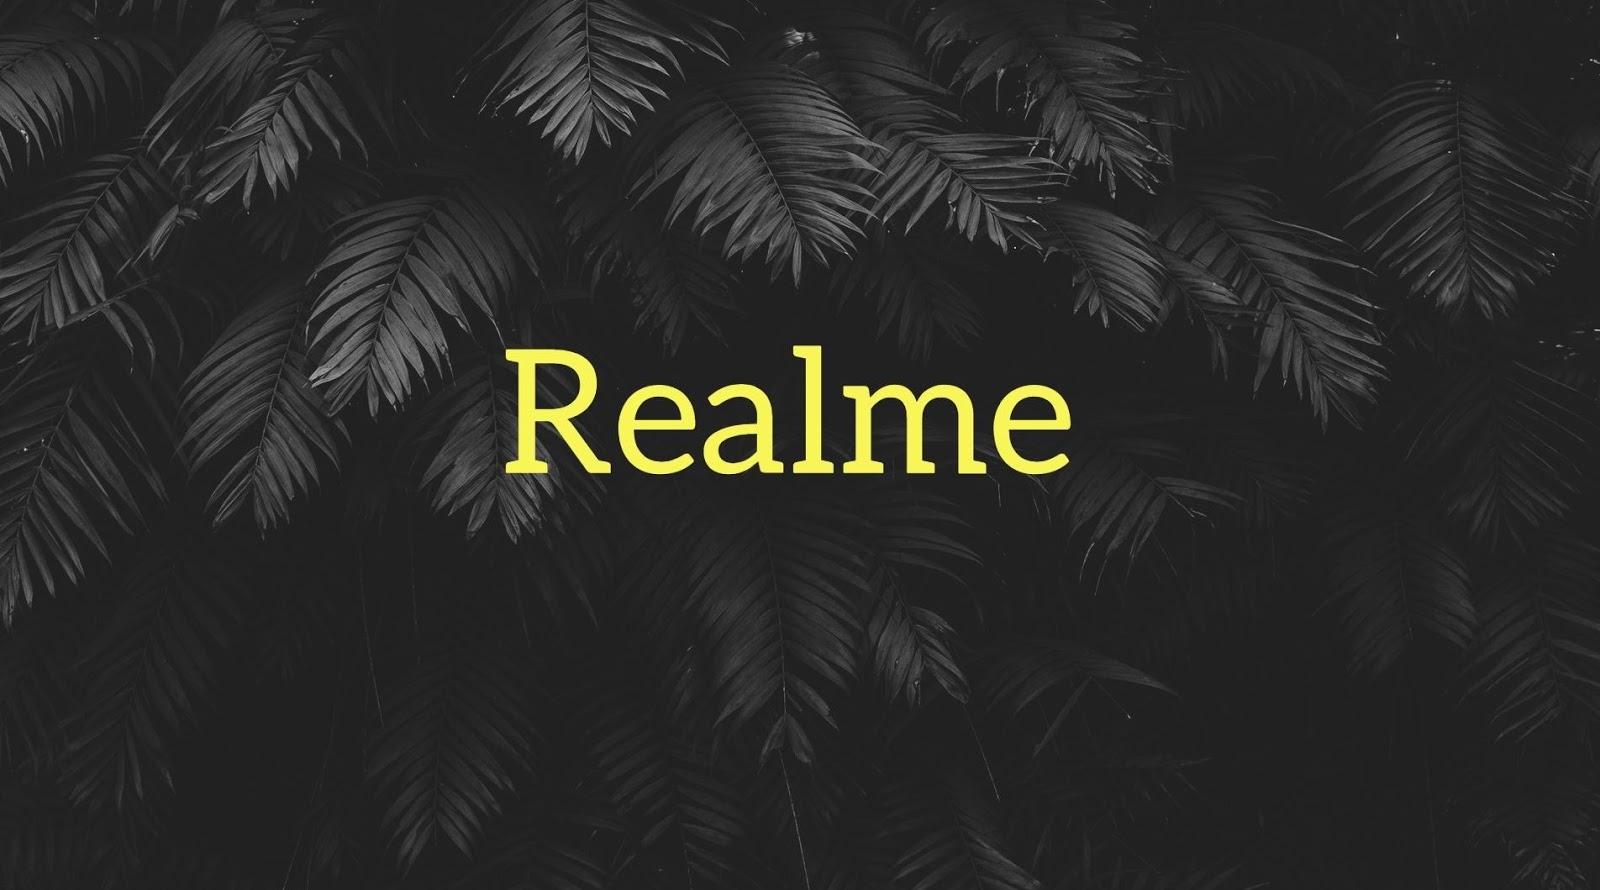 realme - realme added a new photo.